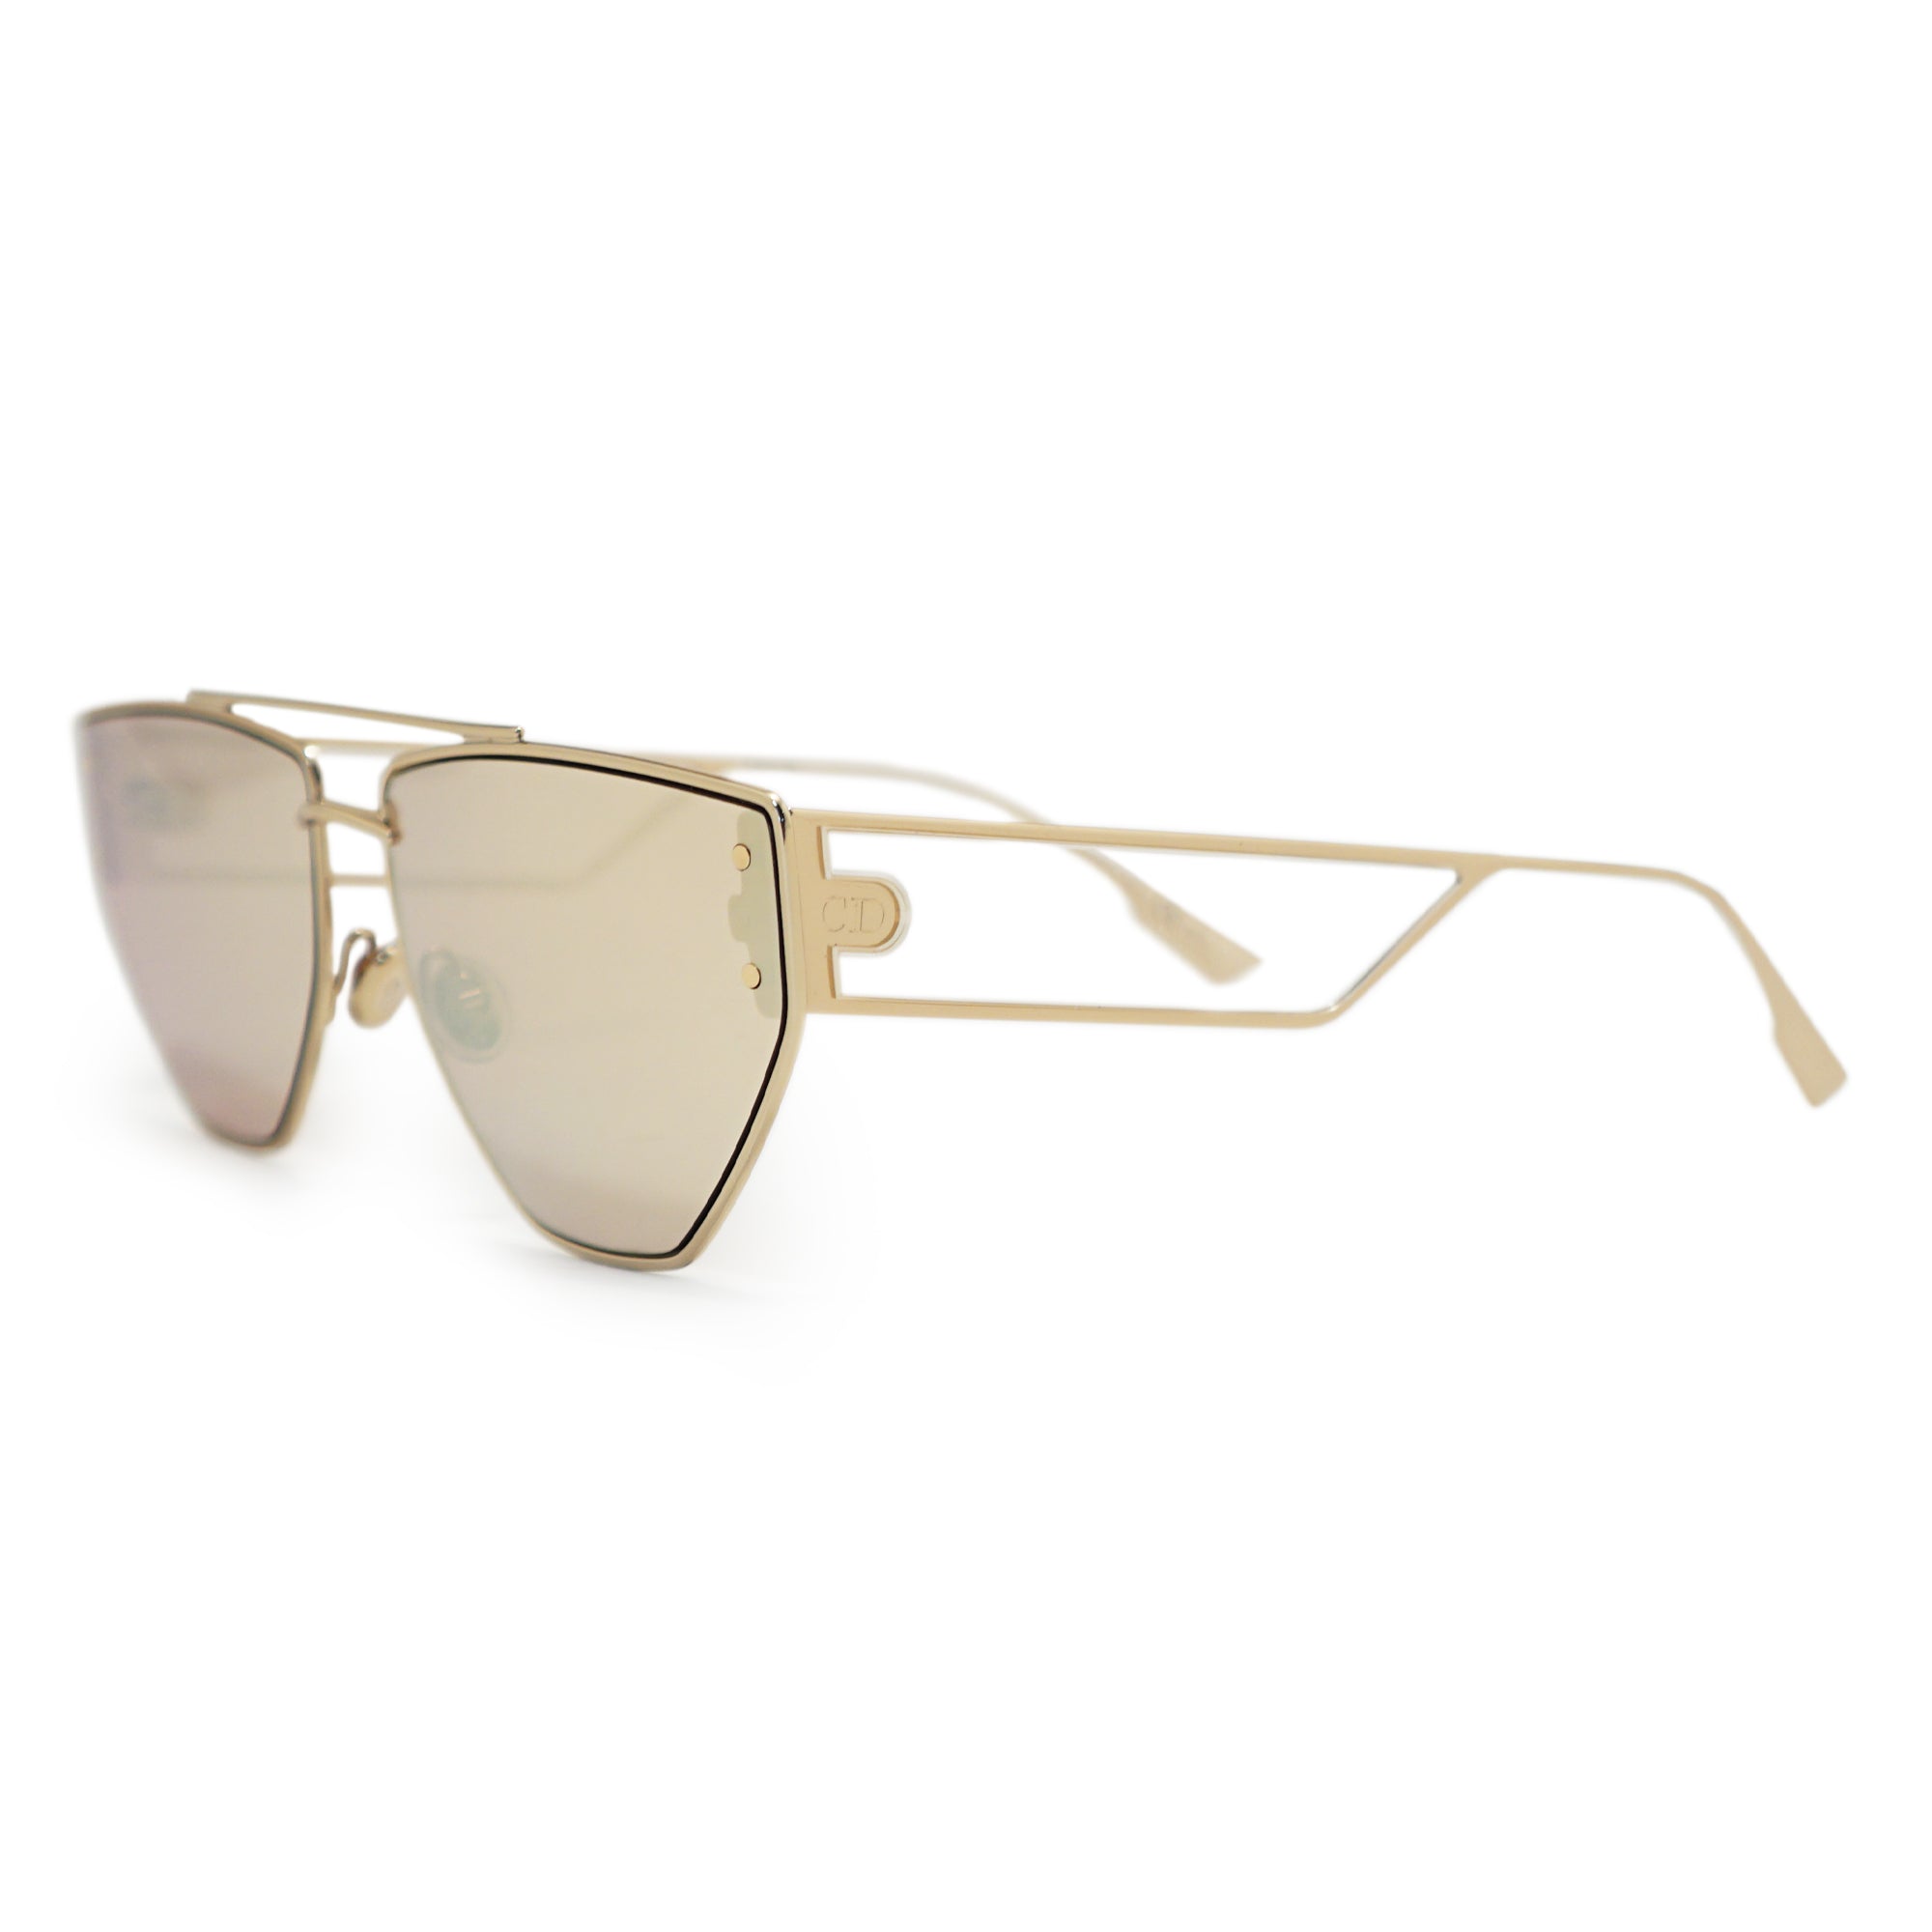 Dior Full Rimmed Sunglasses Clan 2 000SQ 61